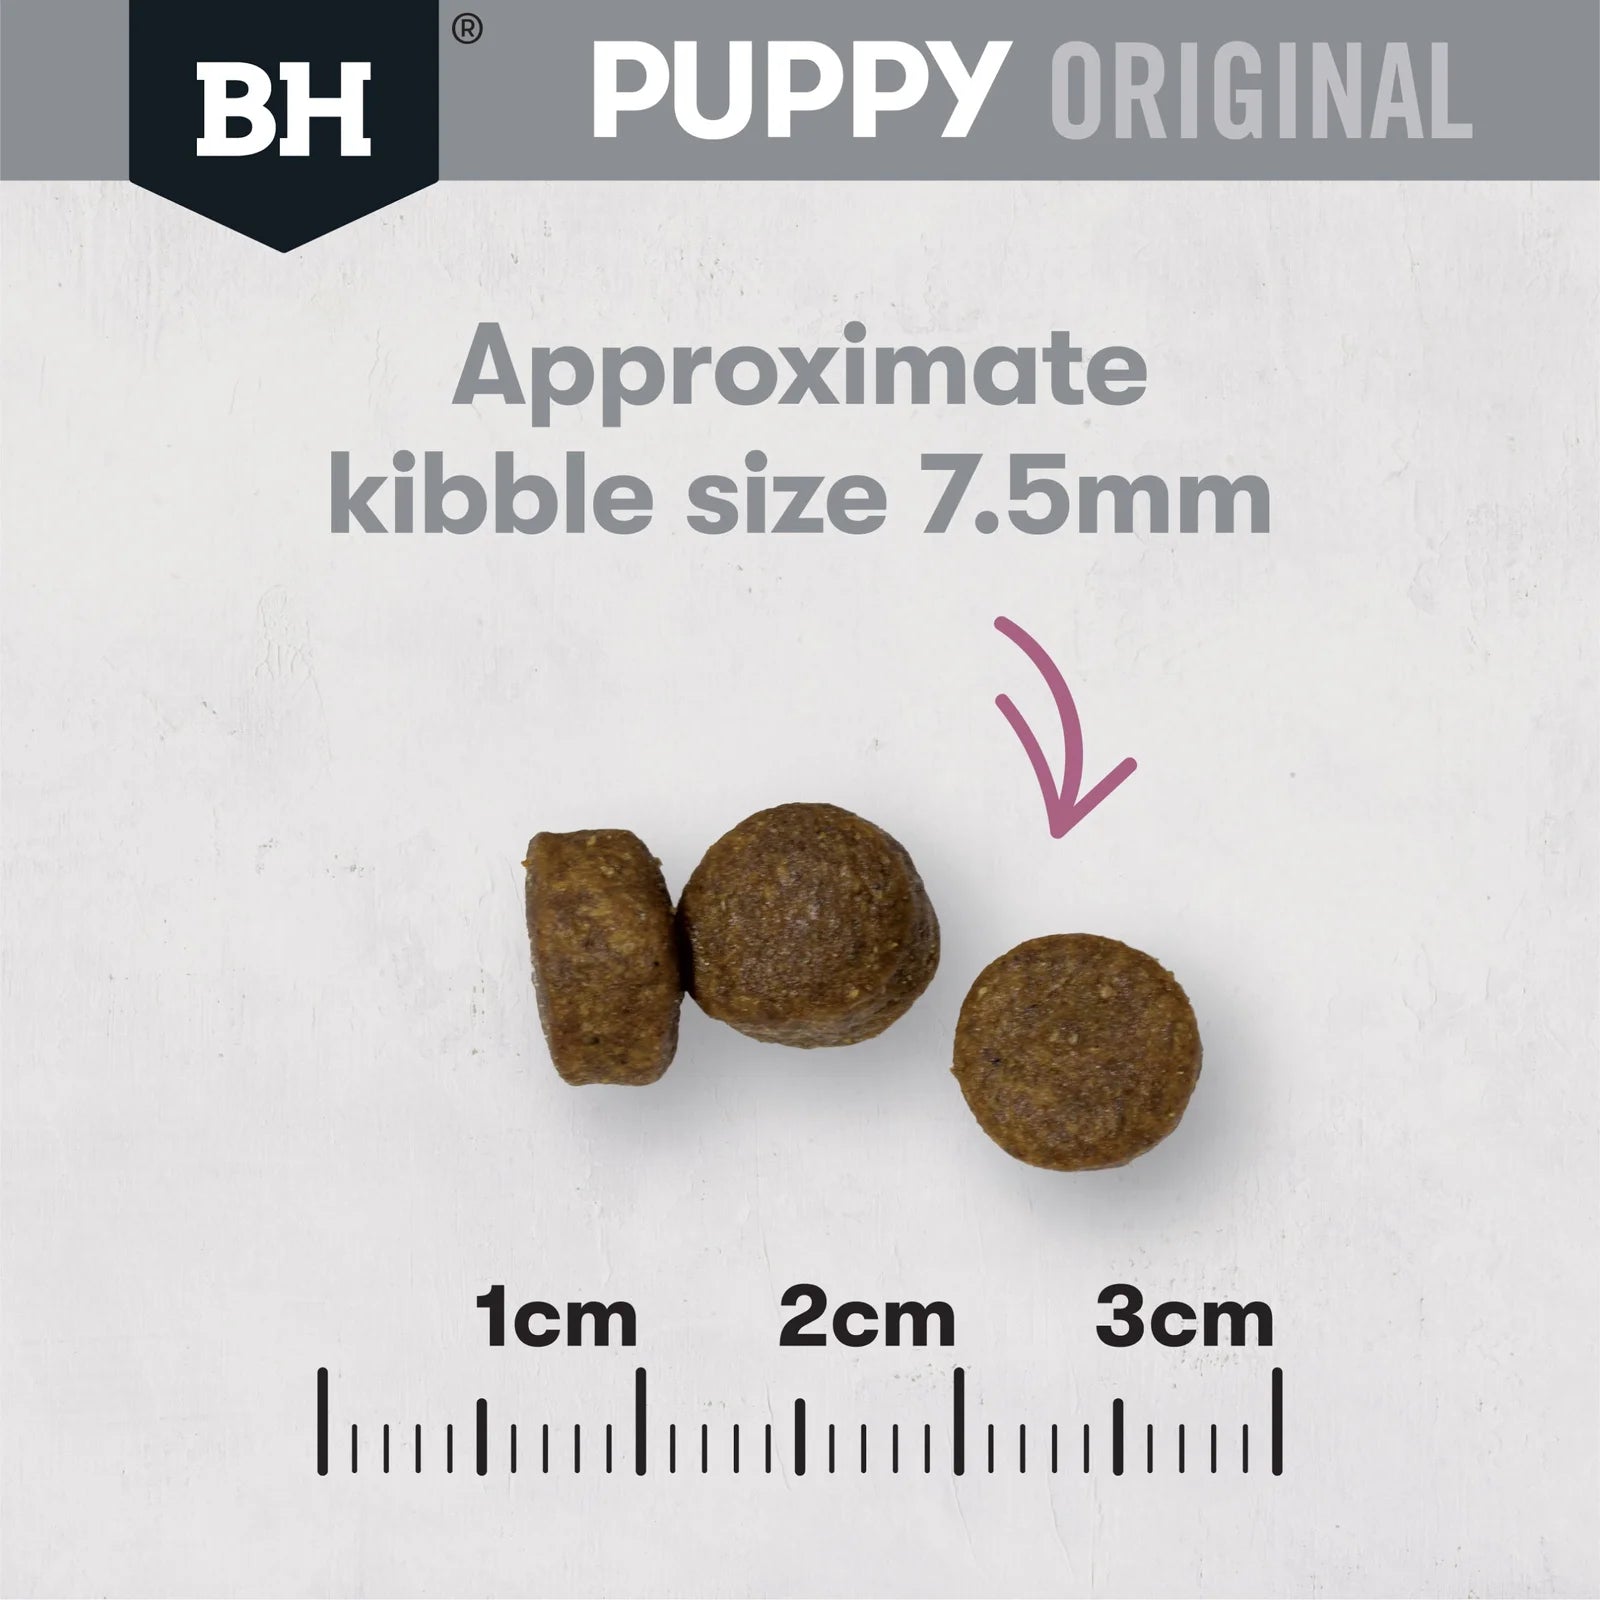 Black Hawk Puppy Dog Food Lamb & Rice 10kg - The Doggie Shop